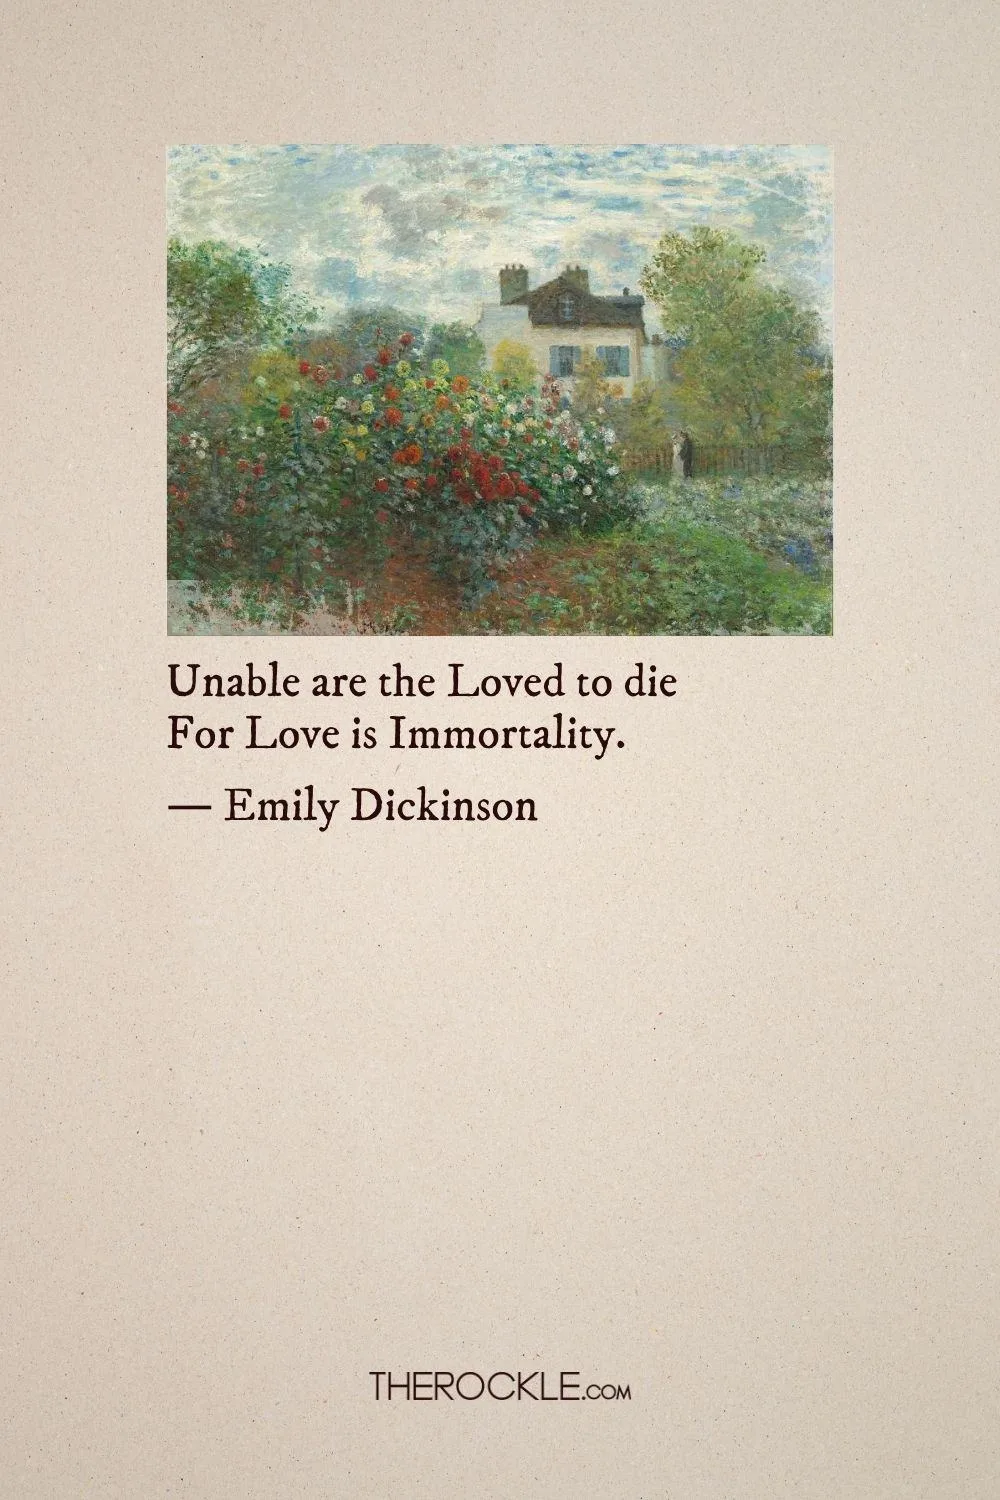 Dickinson on how love transcends death